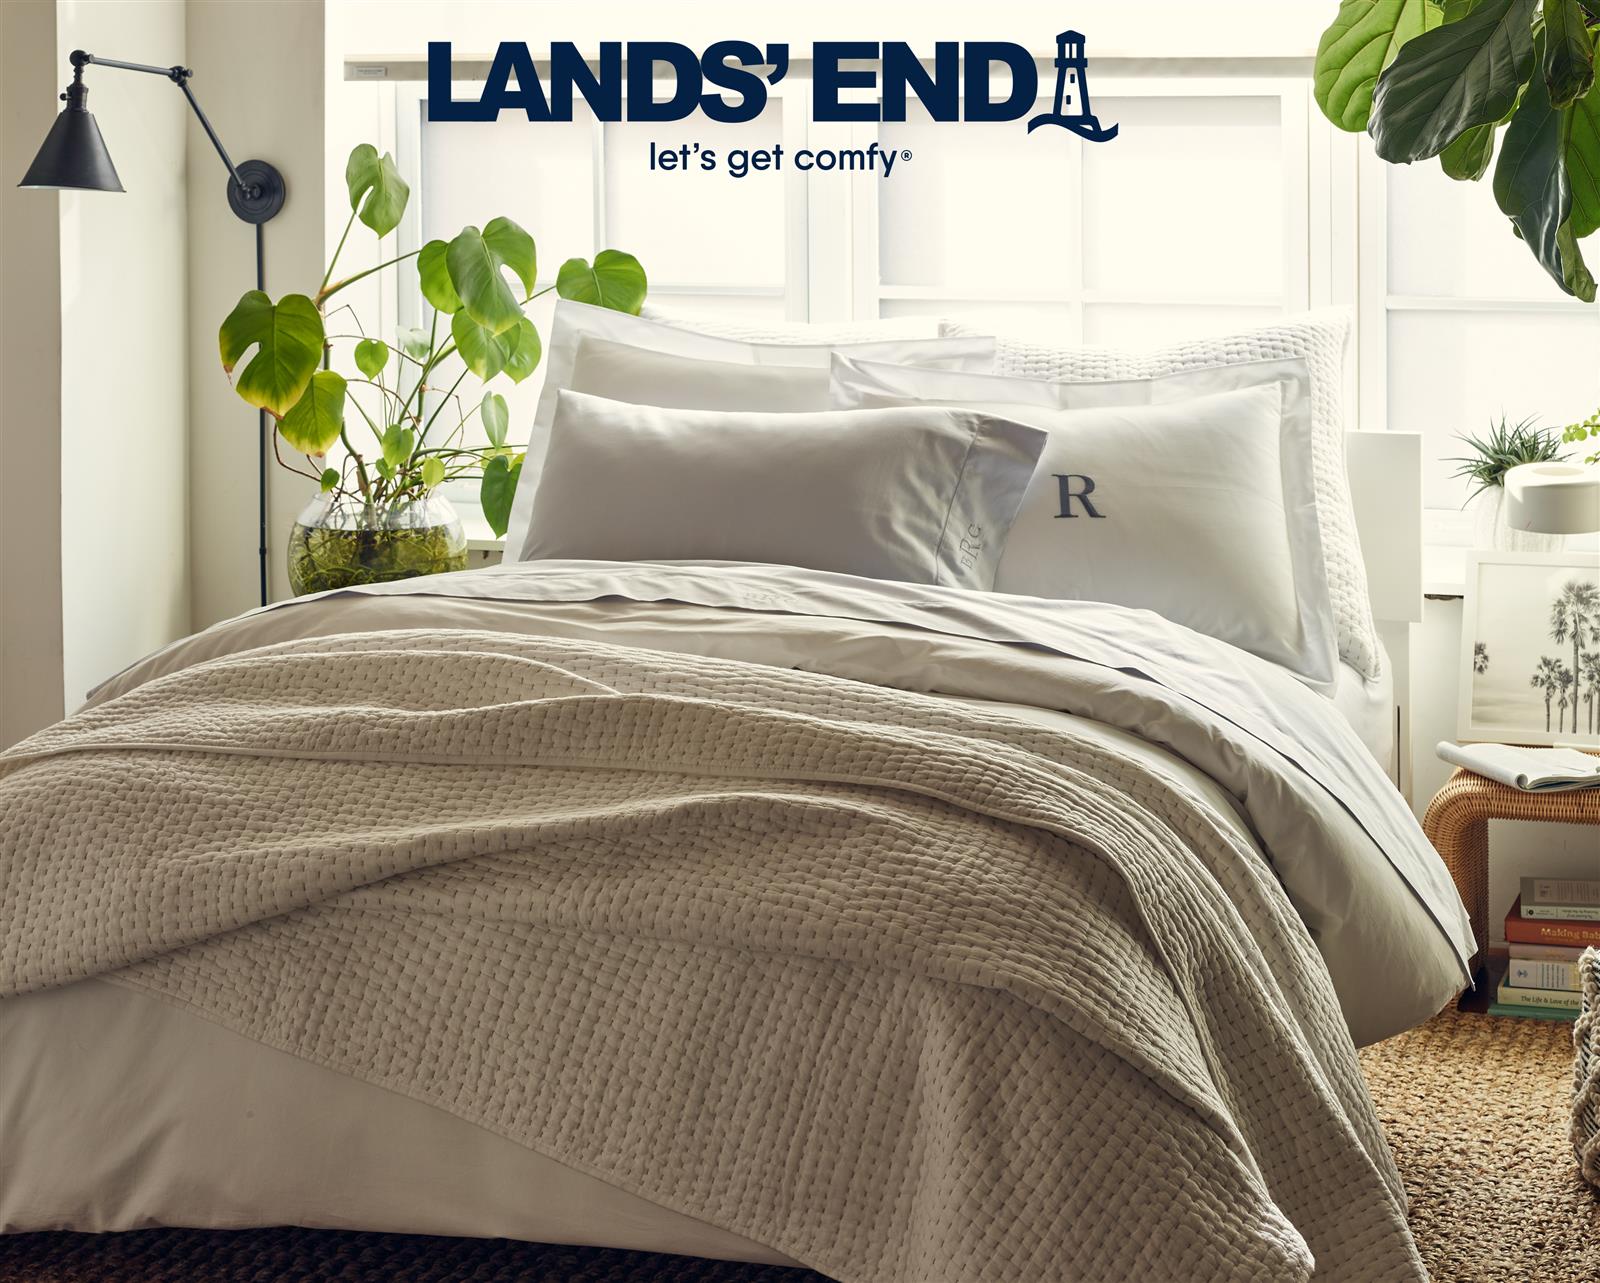 Quick bedroom refresh with a duvet change  | Lands' End